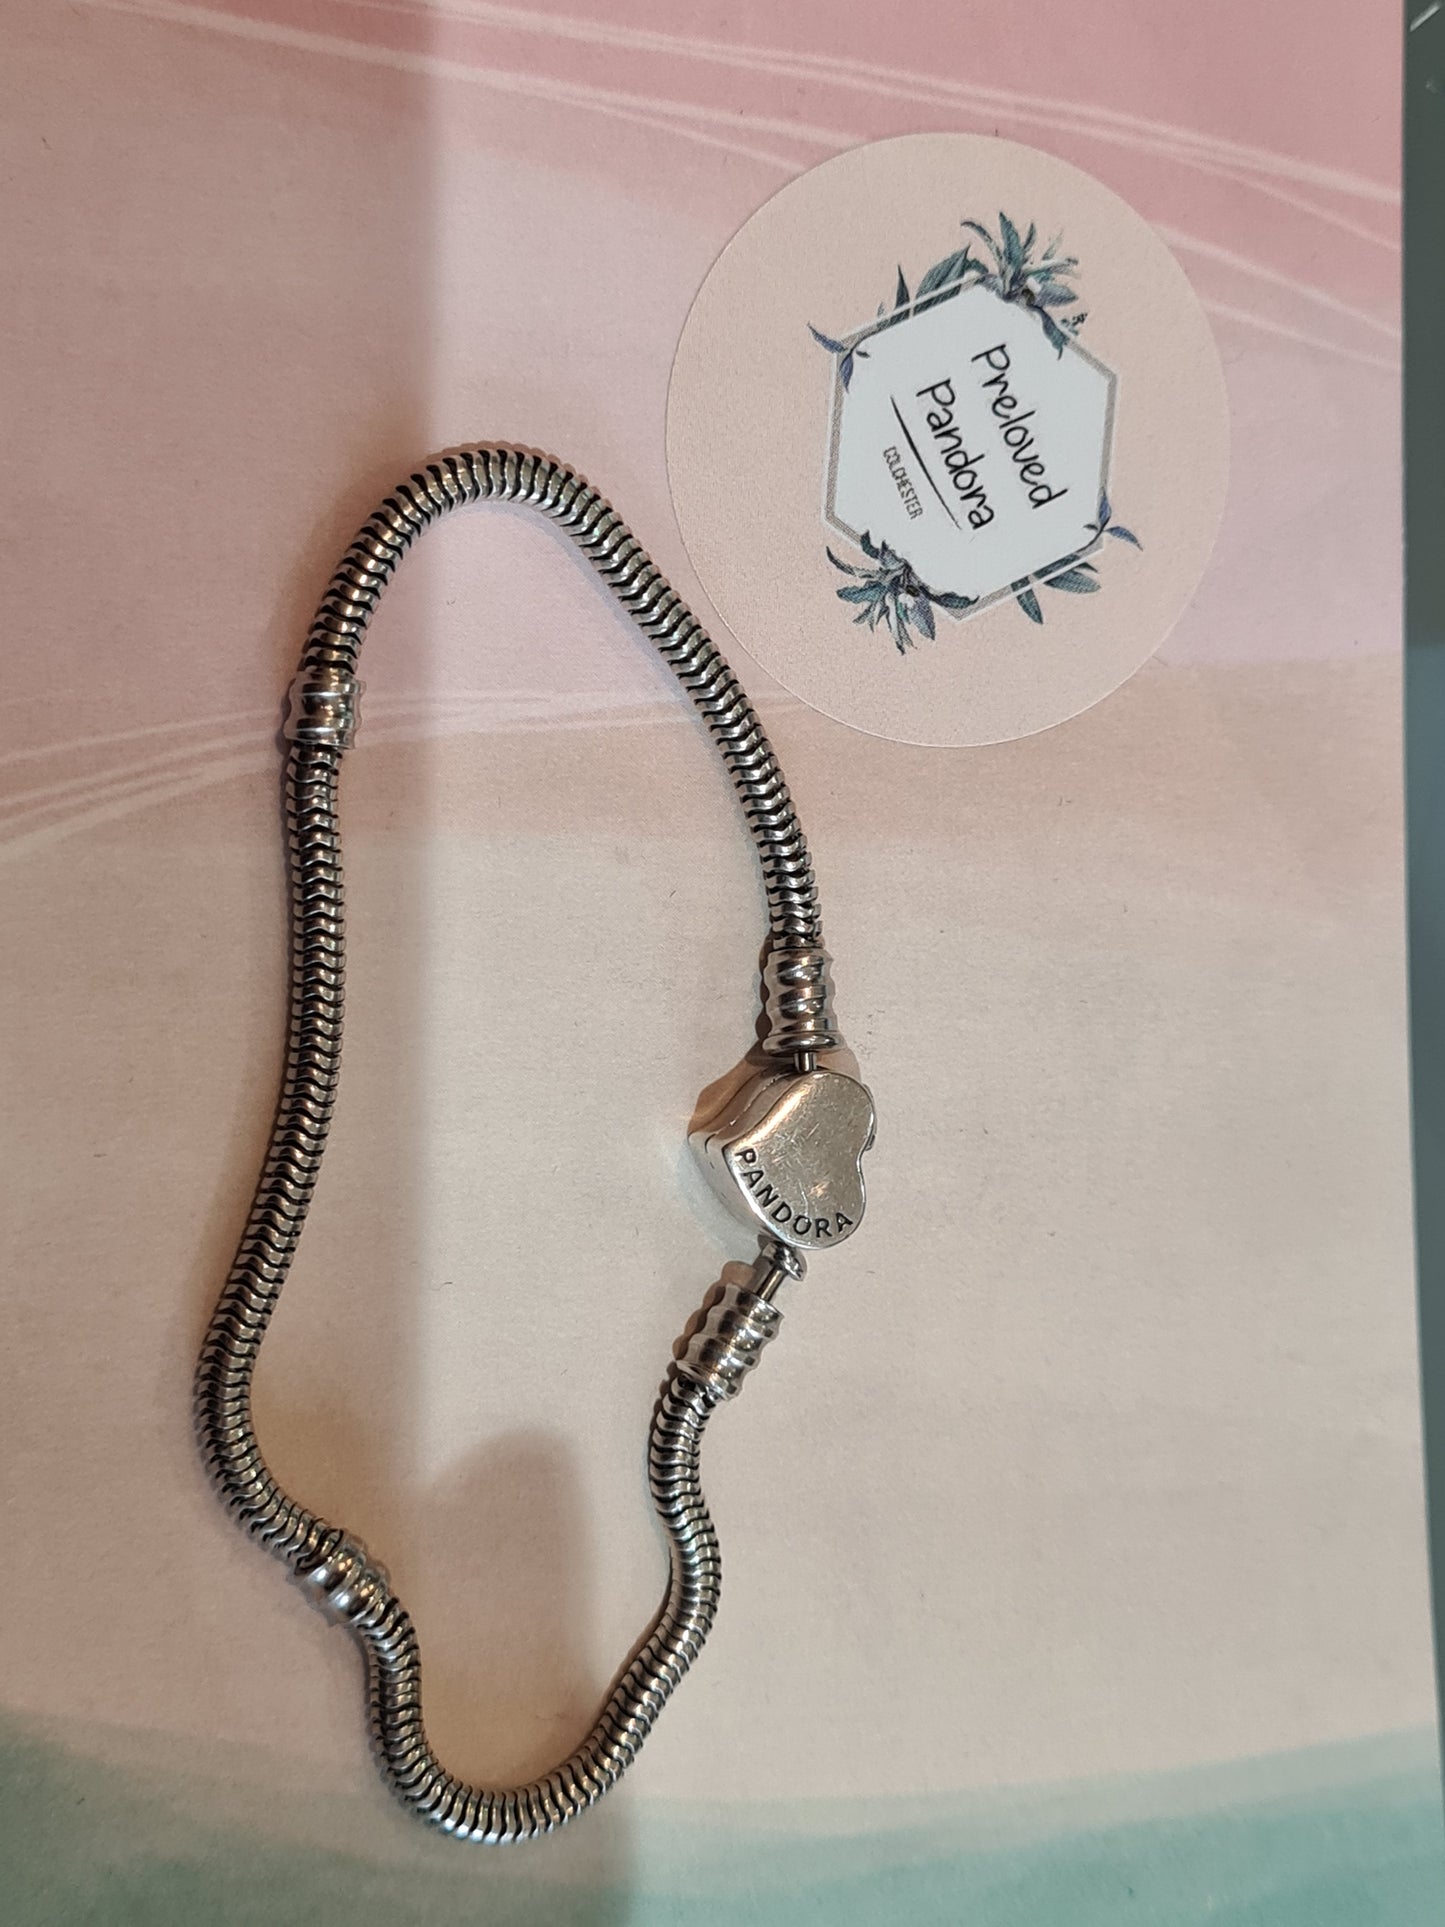 Unbranded Silver Charm Bracelet Heart Clasp 19cm